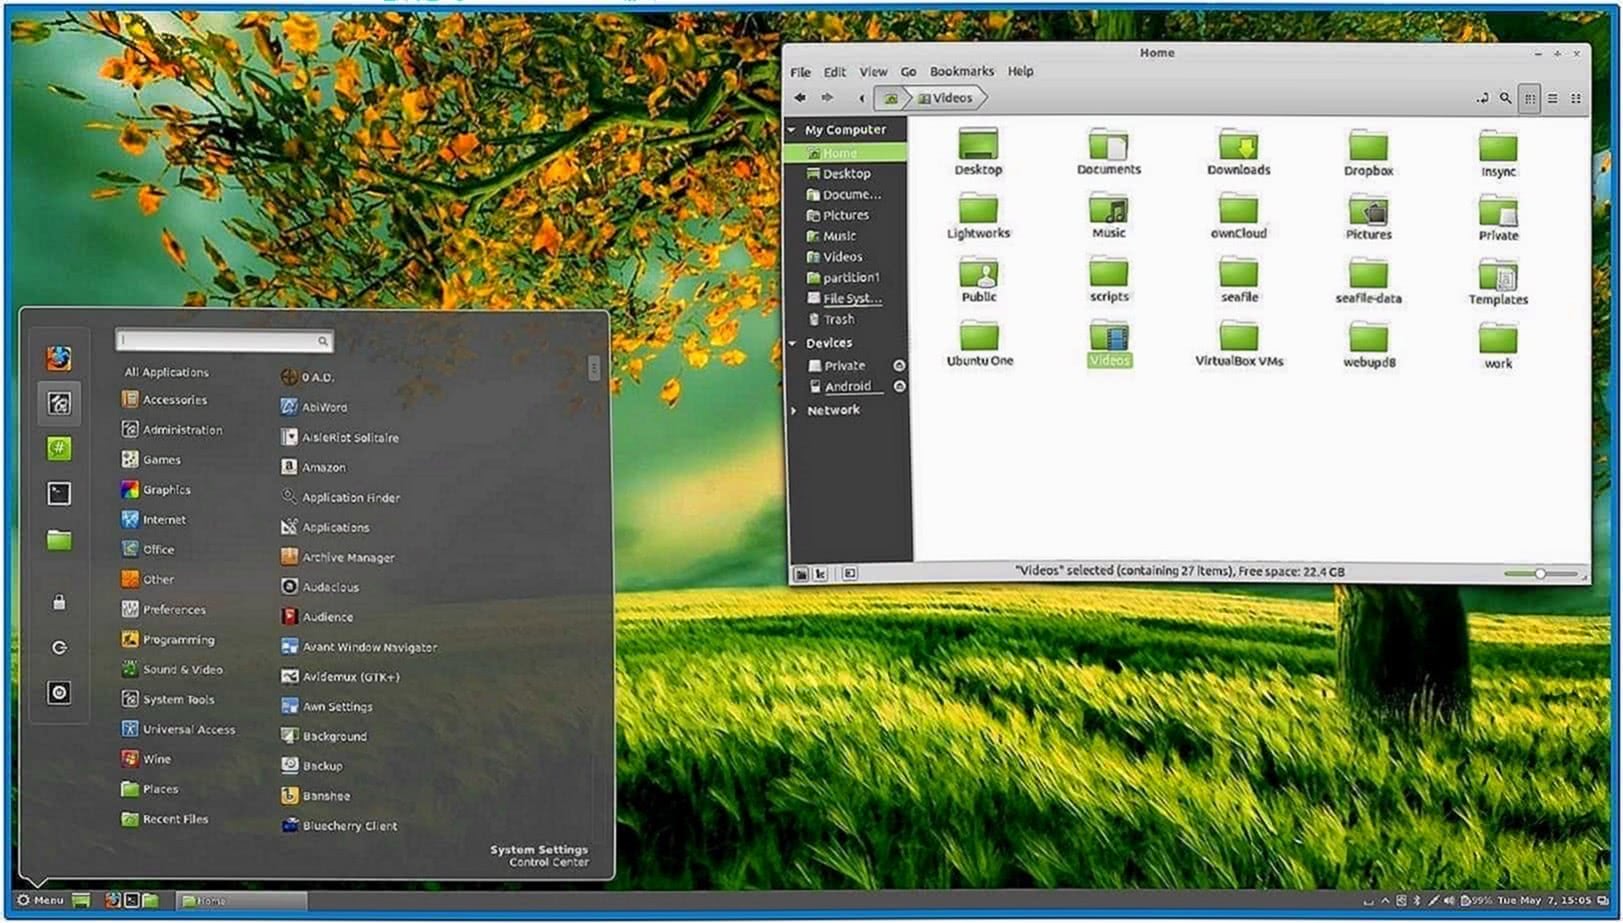 Linux Mint 13 Cinnamon Screensaver